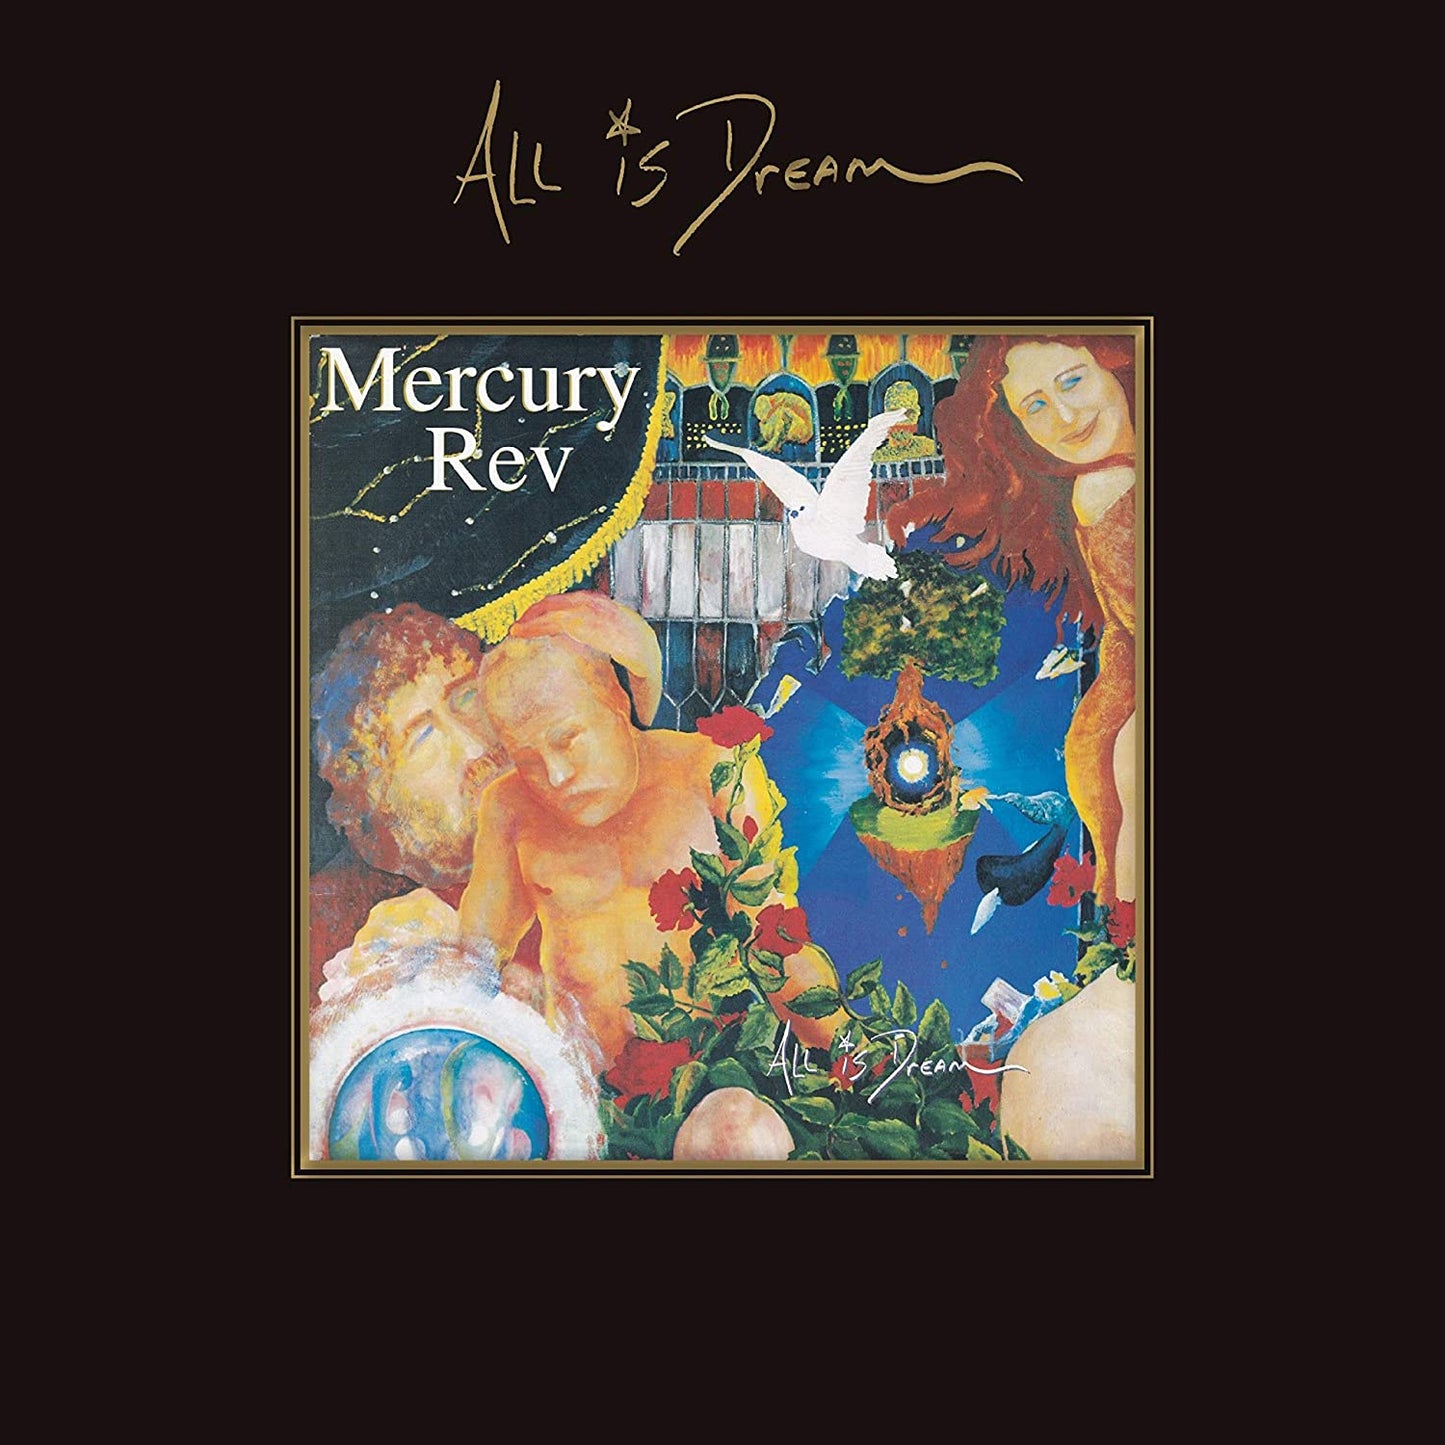 Mercury Rev - All Is Dream - 4CD